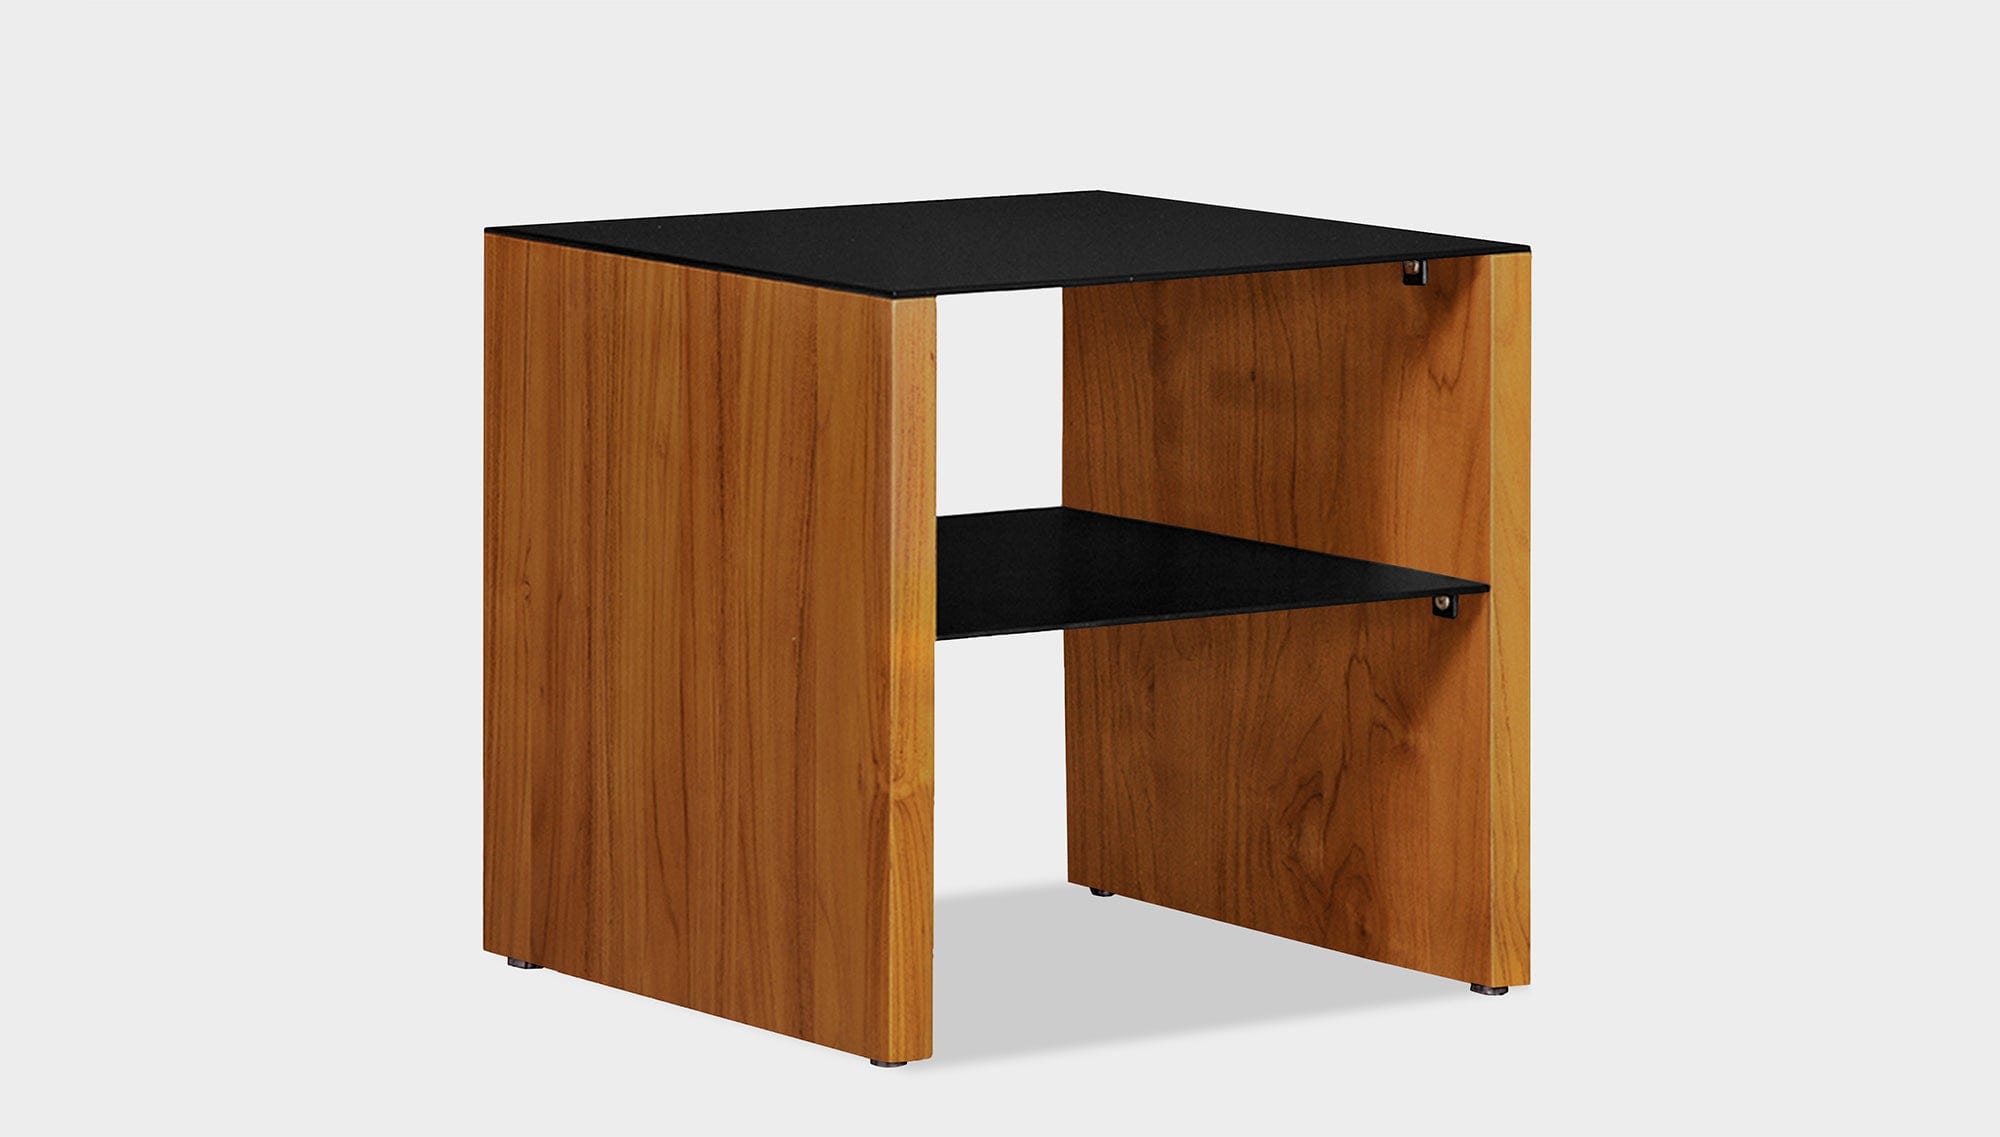 reddie-raw square side table 45W x 45D x 45H *cm / Metal~Black / Wood Teak~Natural Andi Side Table